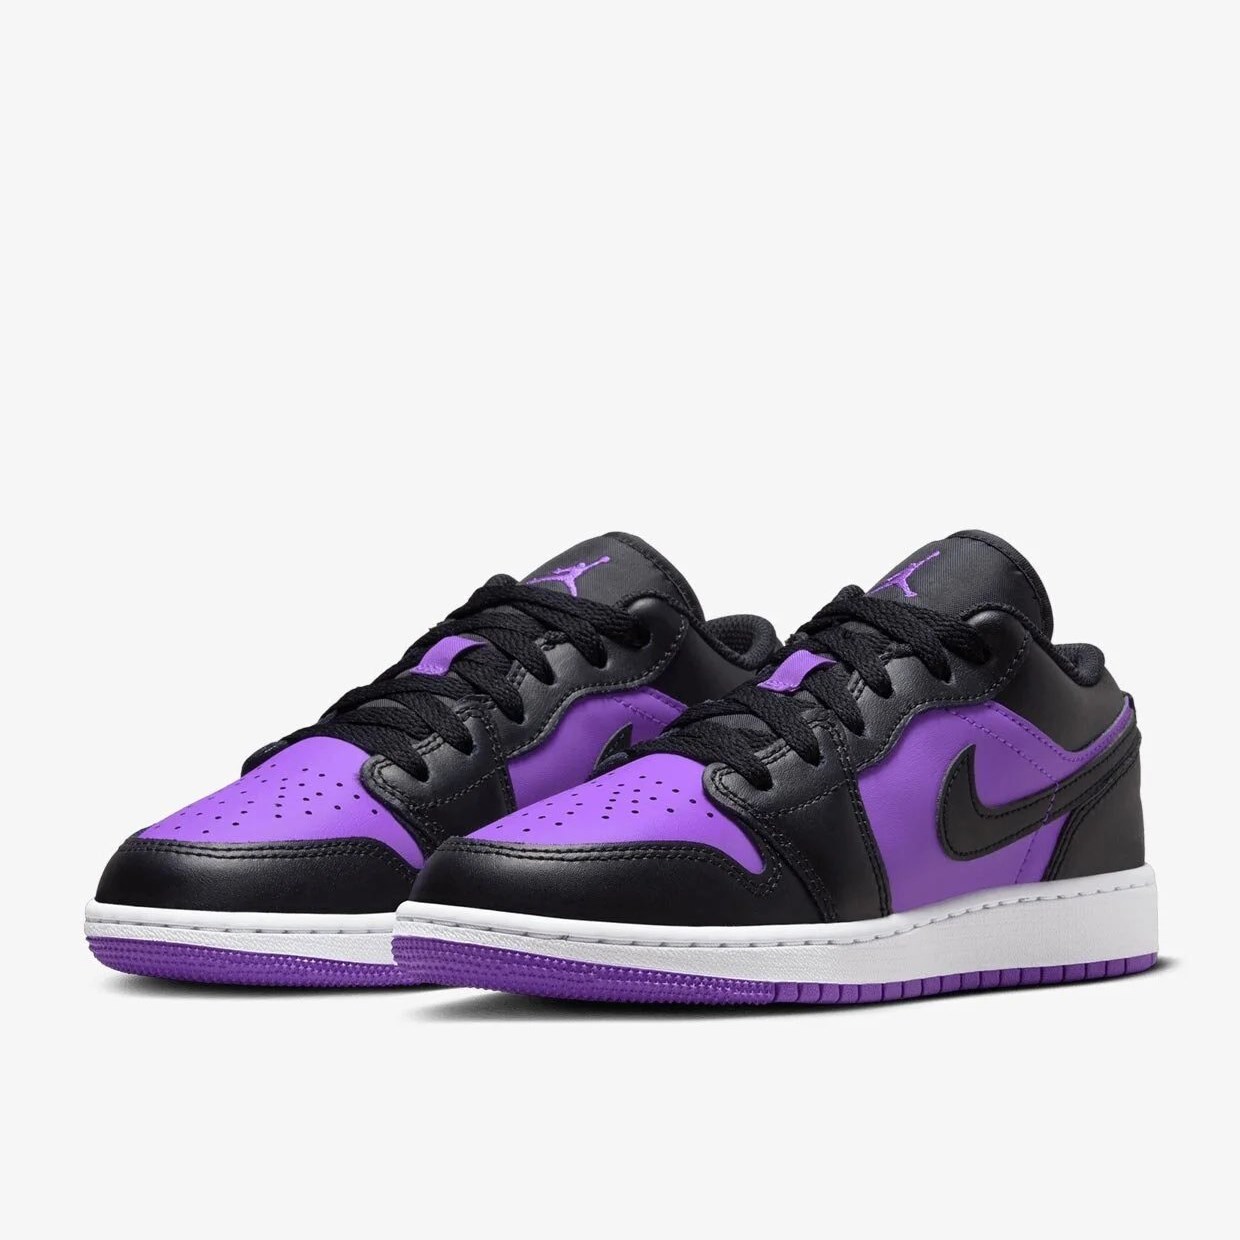 Nike Air Jordan 1 Retro Low Top Court Erkek Spor Ayakkabı Purple - Black - White